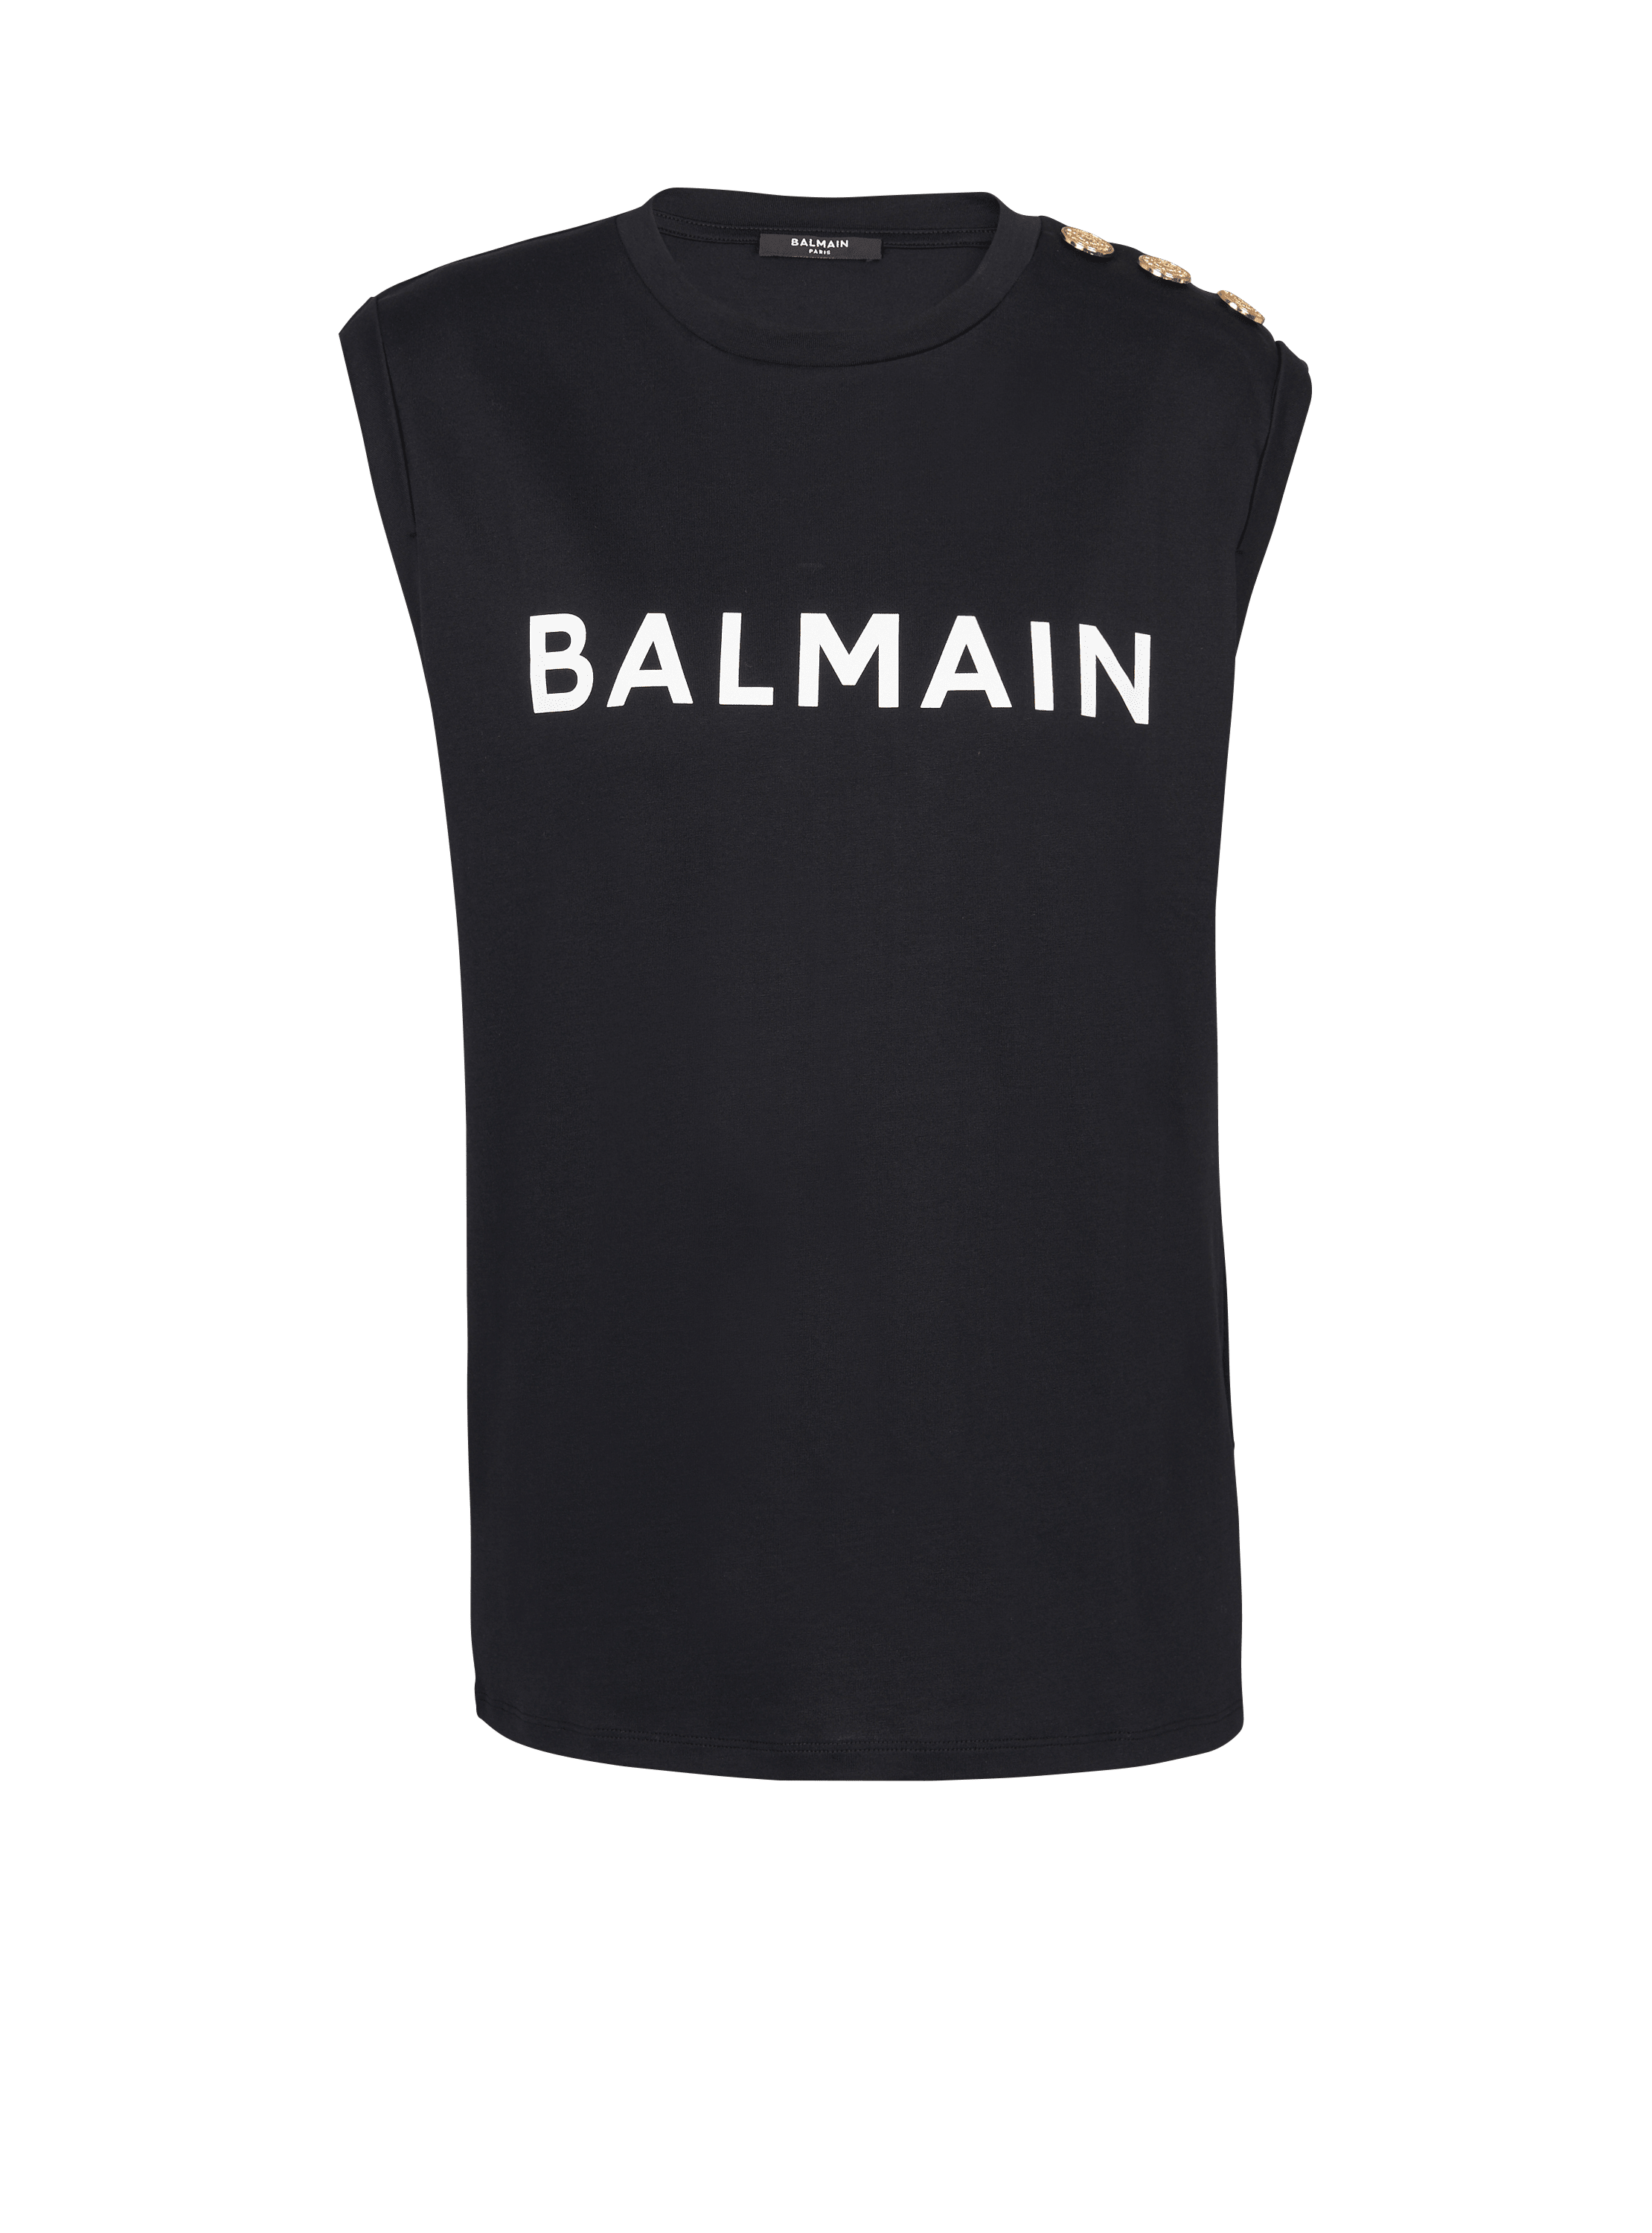 T-shirt en coton éco-responsable imprimé logo Balmain, noir, hi-res